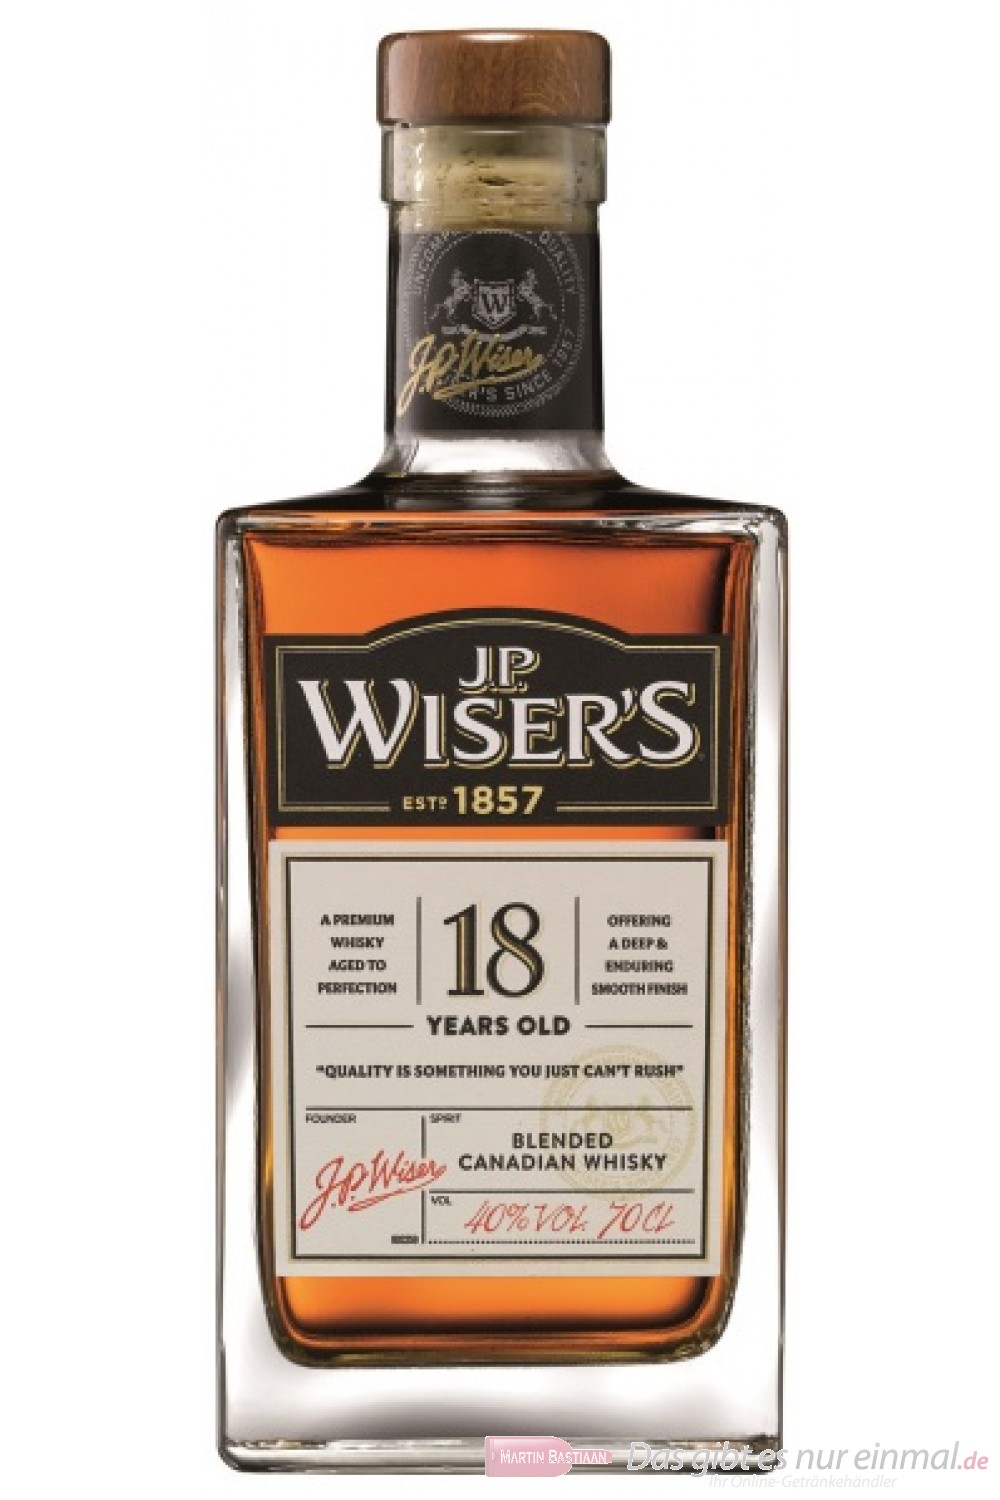 J.P. Wisers 18 Years